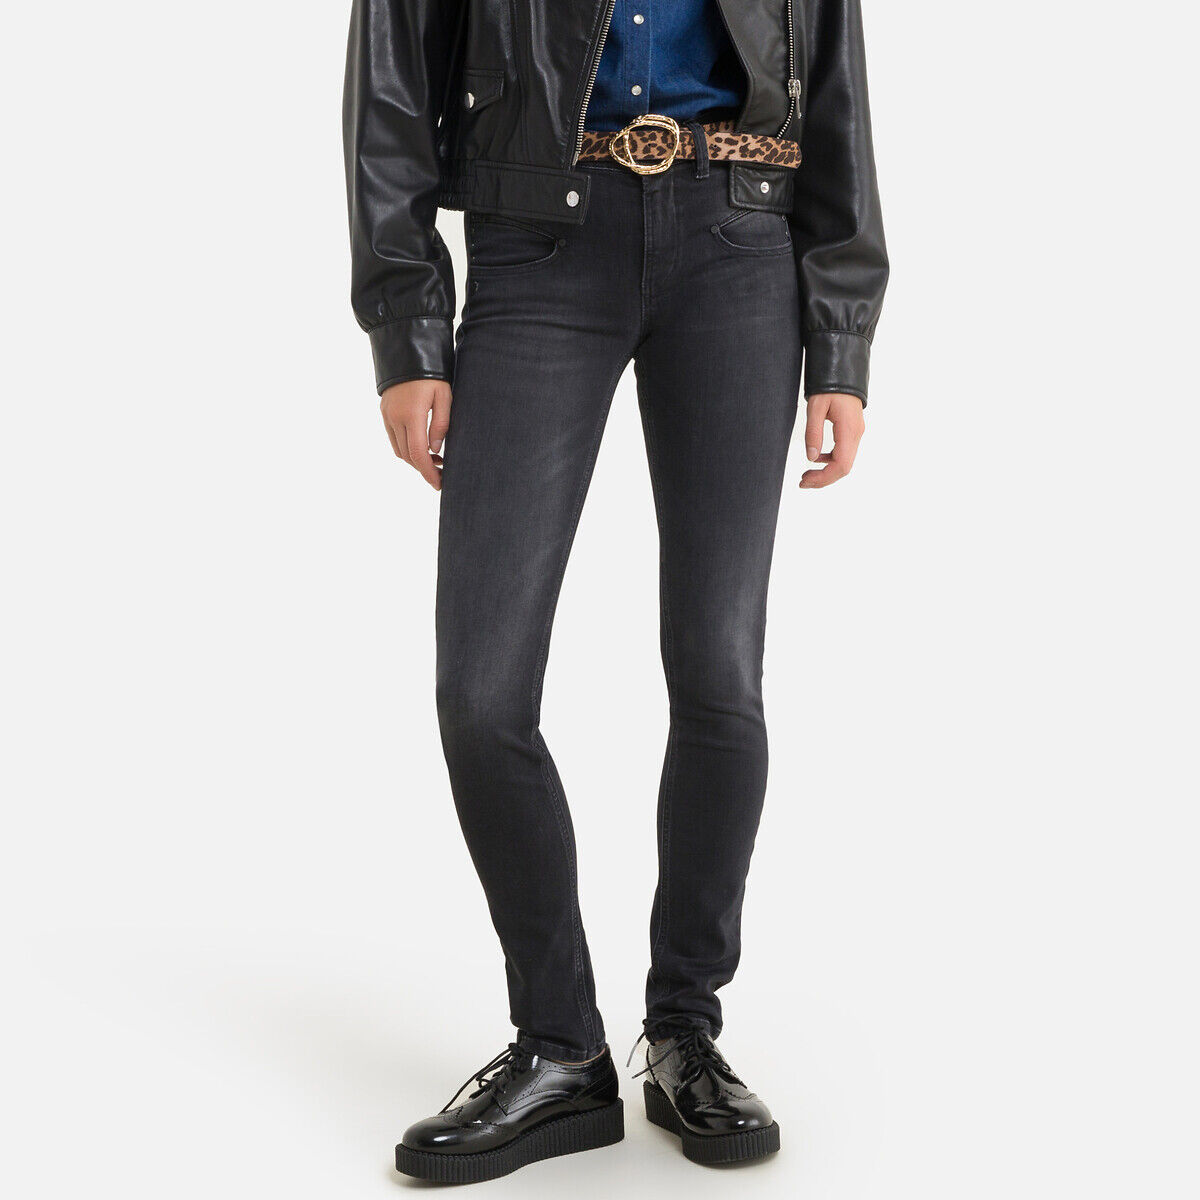 Freeman T. Porter Jeans slim de cintura subida, Alexa High Waist SDM   Feeling